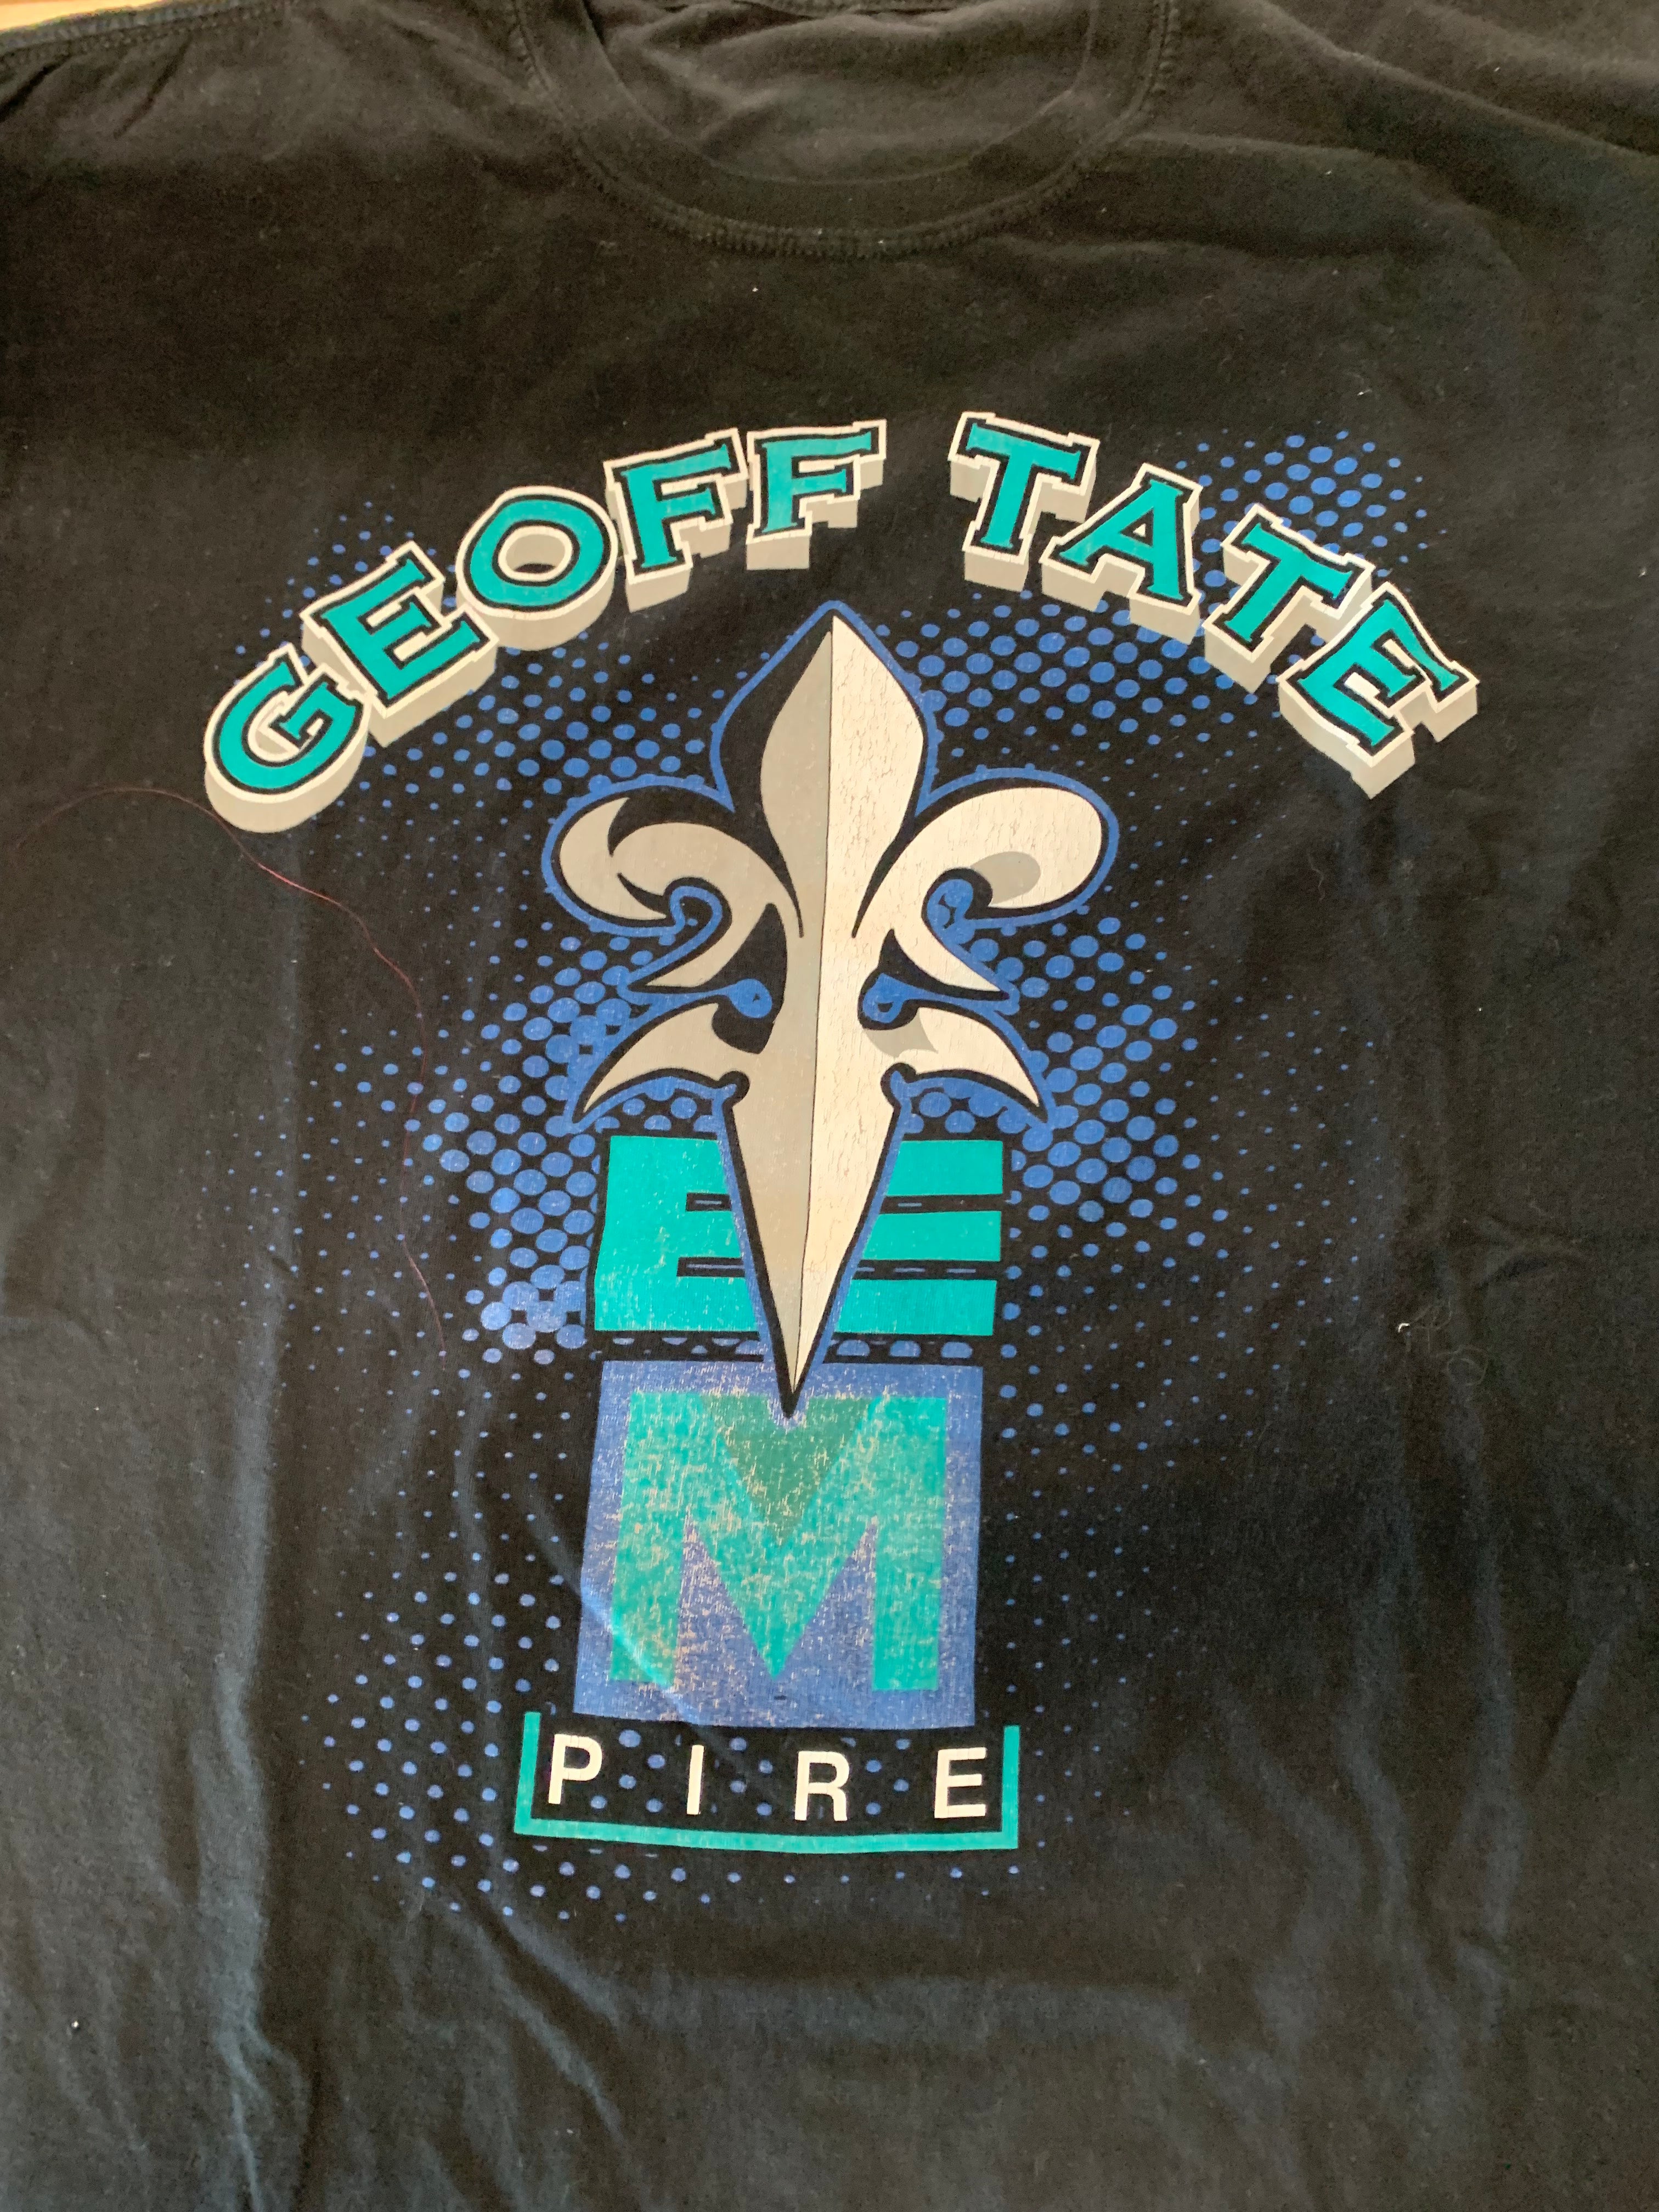 Geoff Tate Empire 30th Anniversary Tour T-Shirt, Black, L